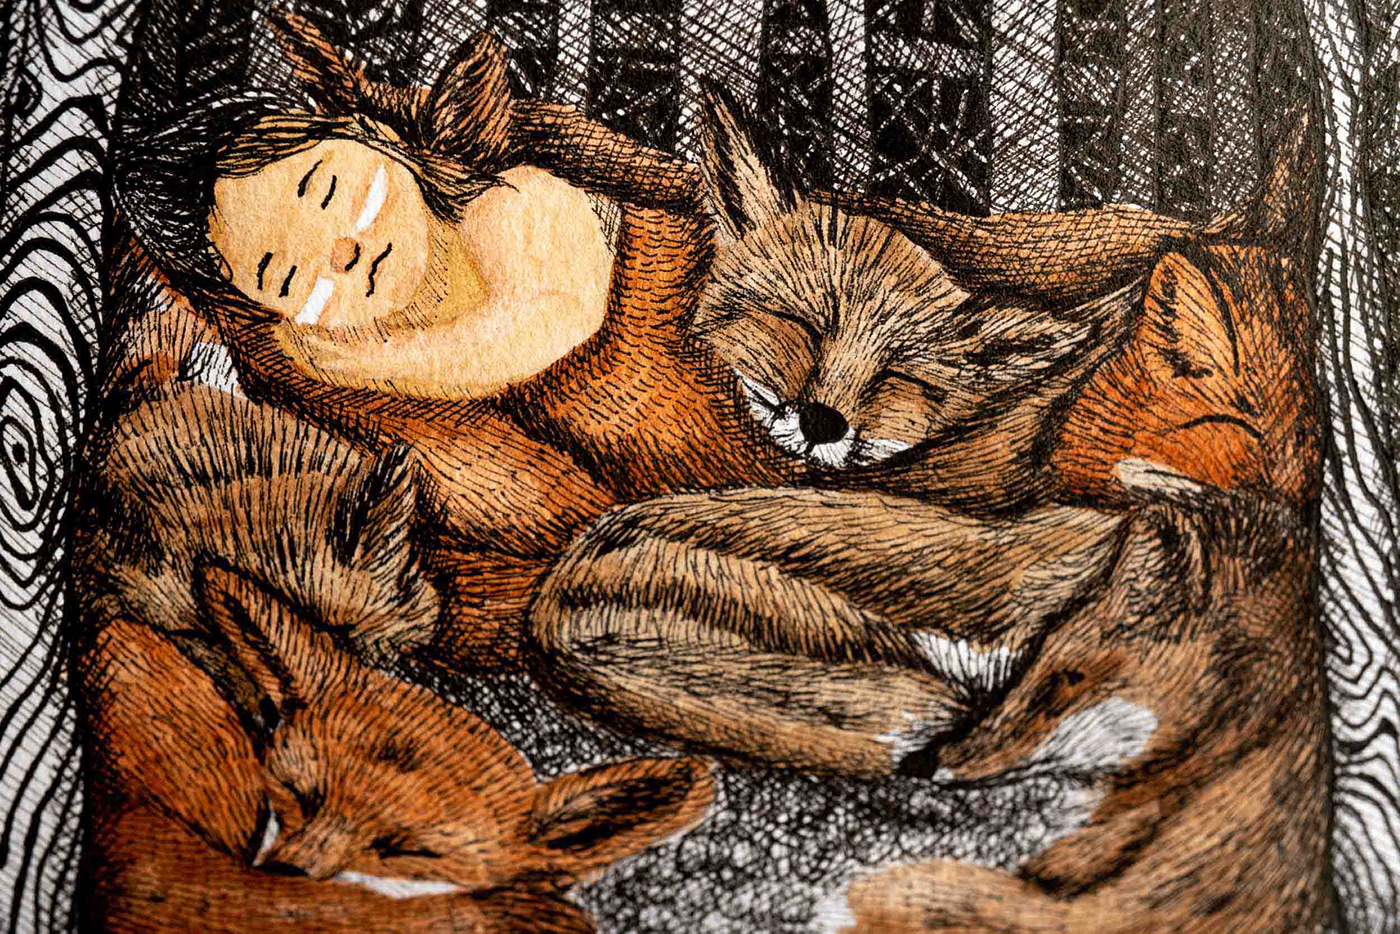 ilustracion ILLUSTRATION  ilustradora Illustrator almendra ilustra yaganes social Illustration perro yagan tierra del fuego yagan illustration